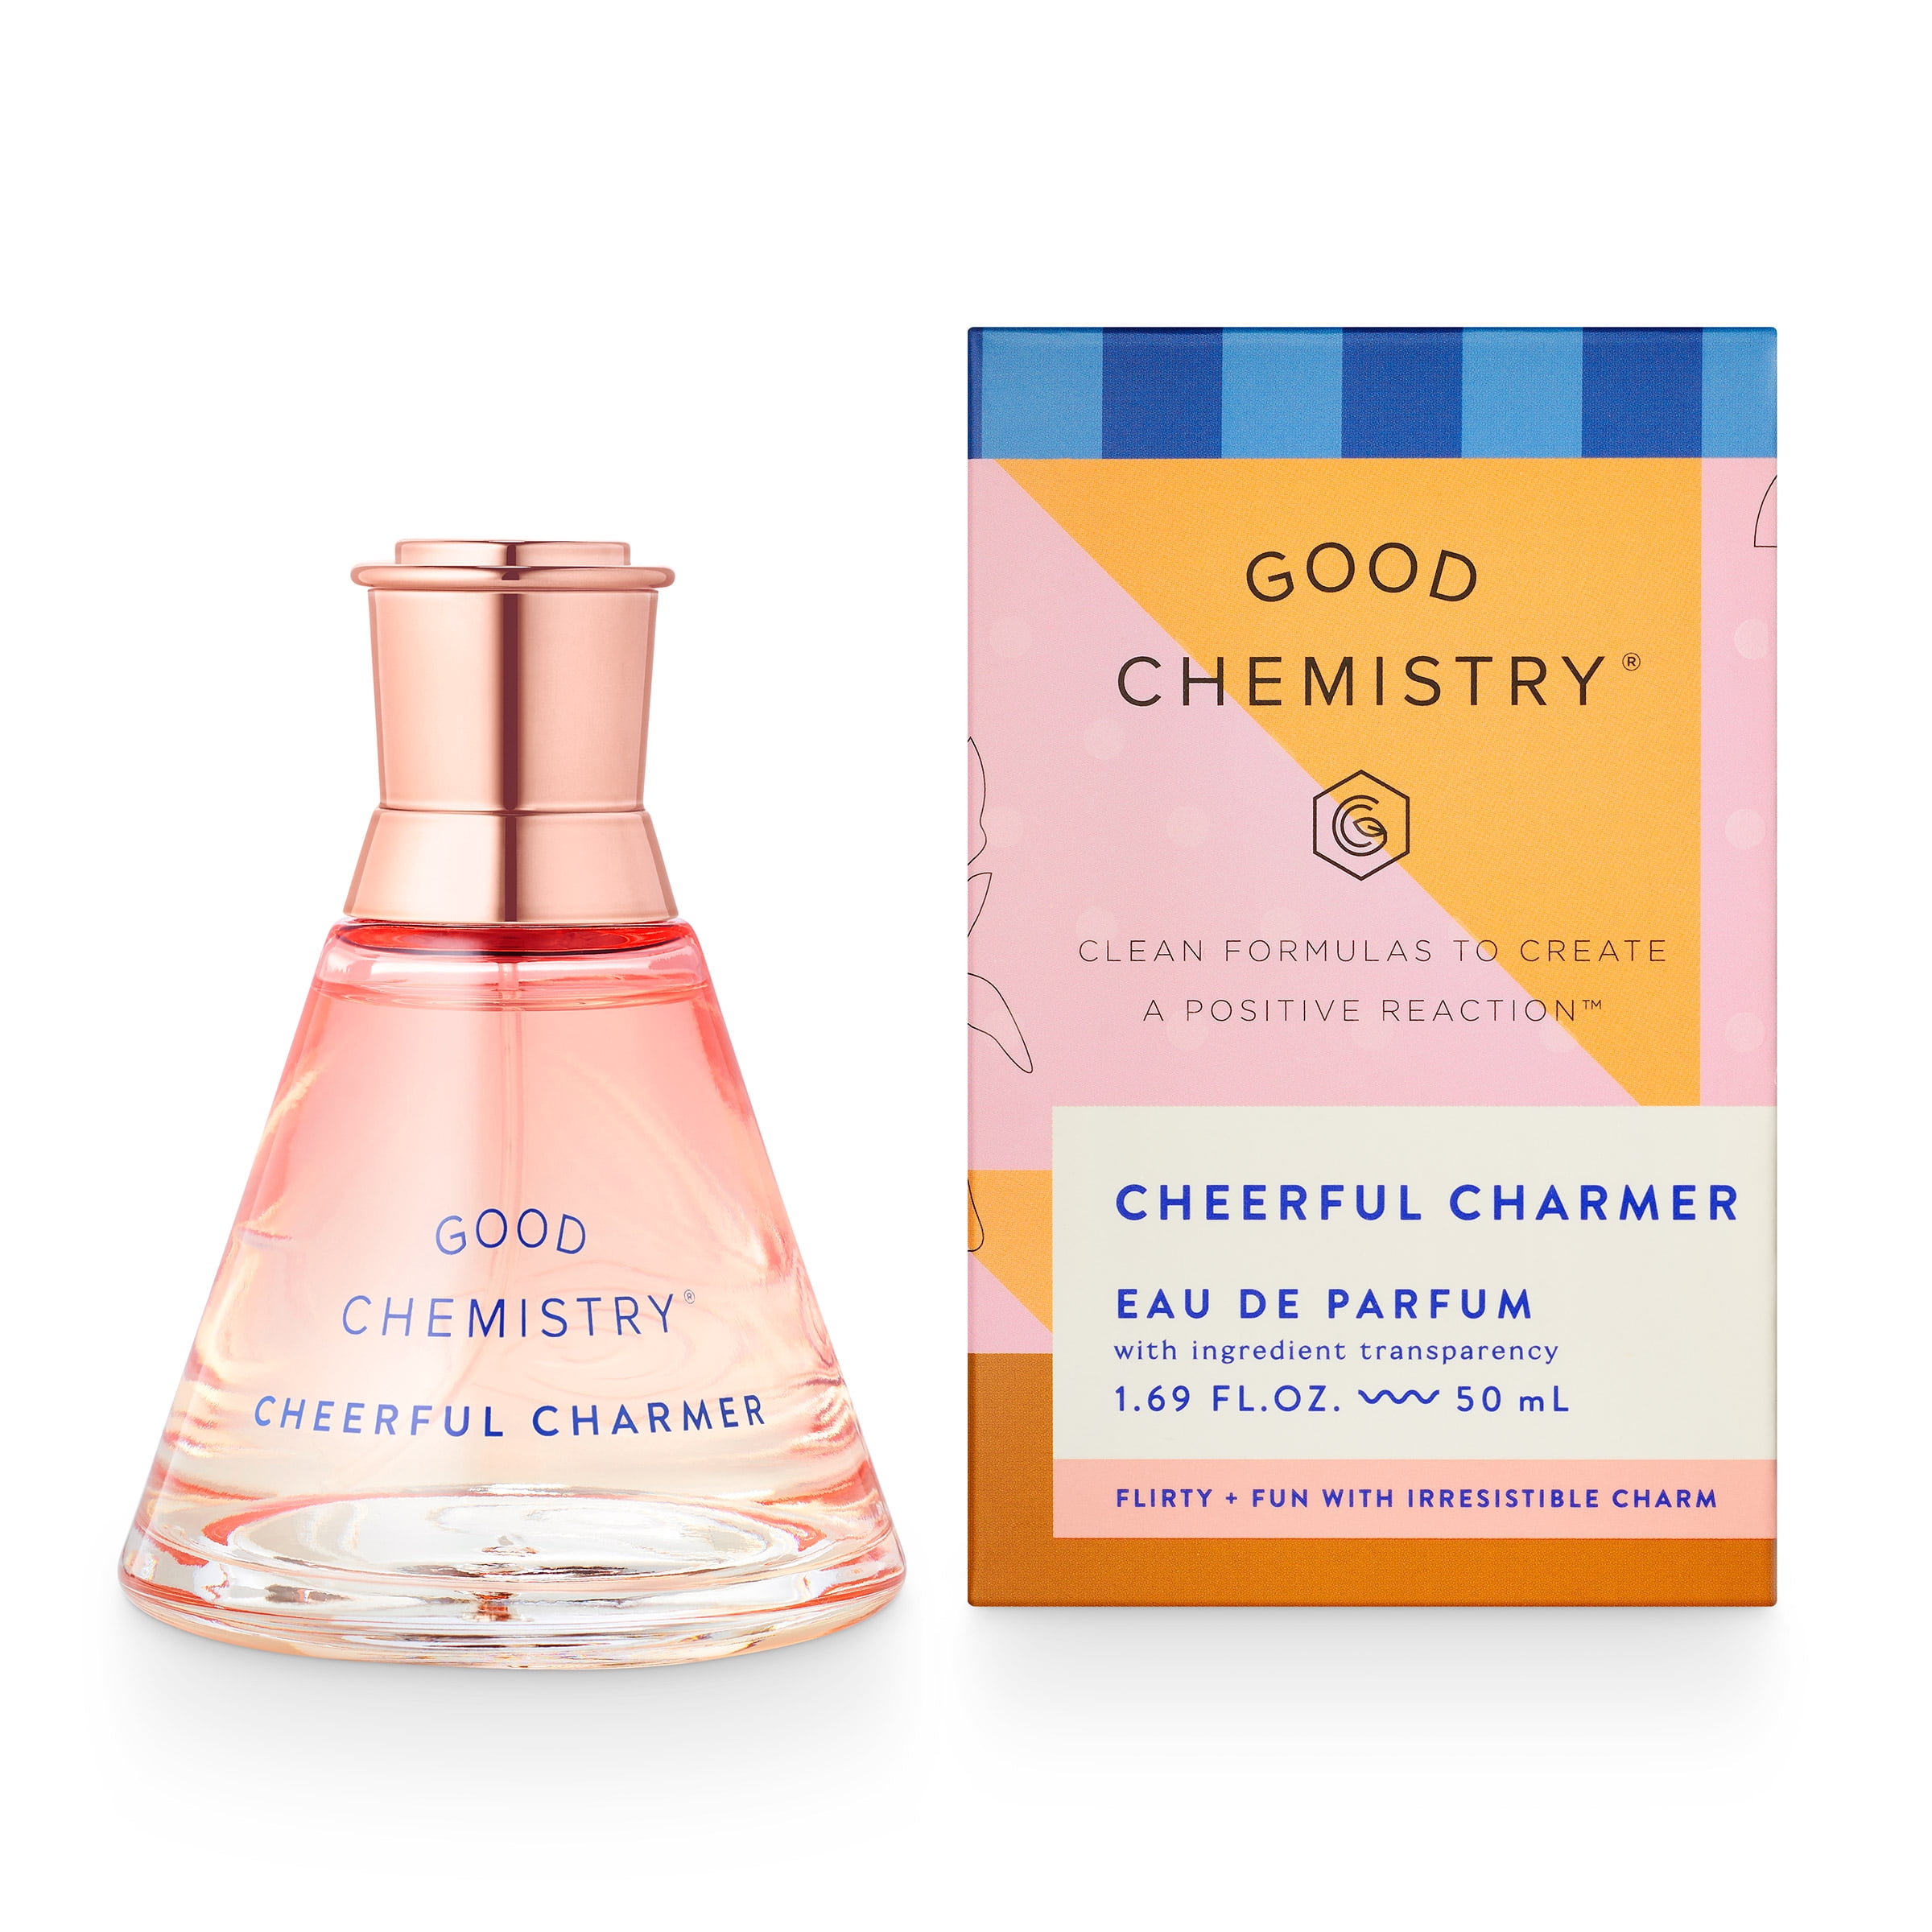 Good Chemistry Eau de Parfum, Cheerful Charmer - 1.69 fl oz